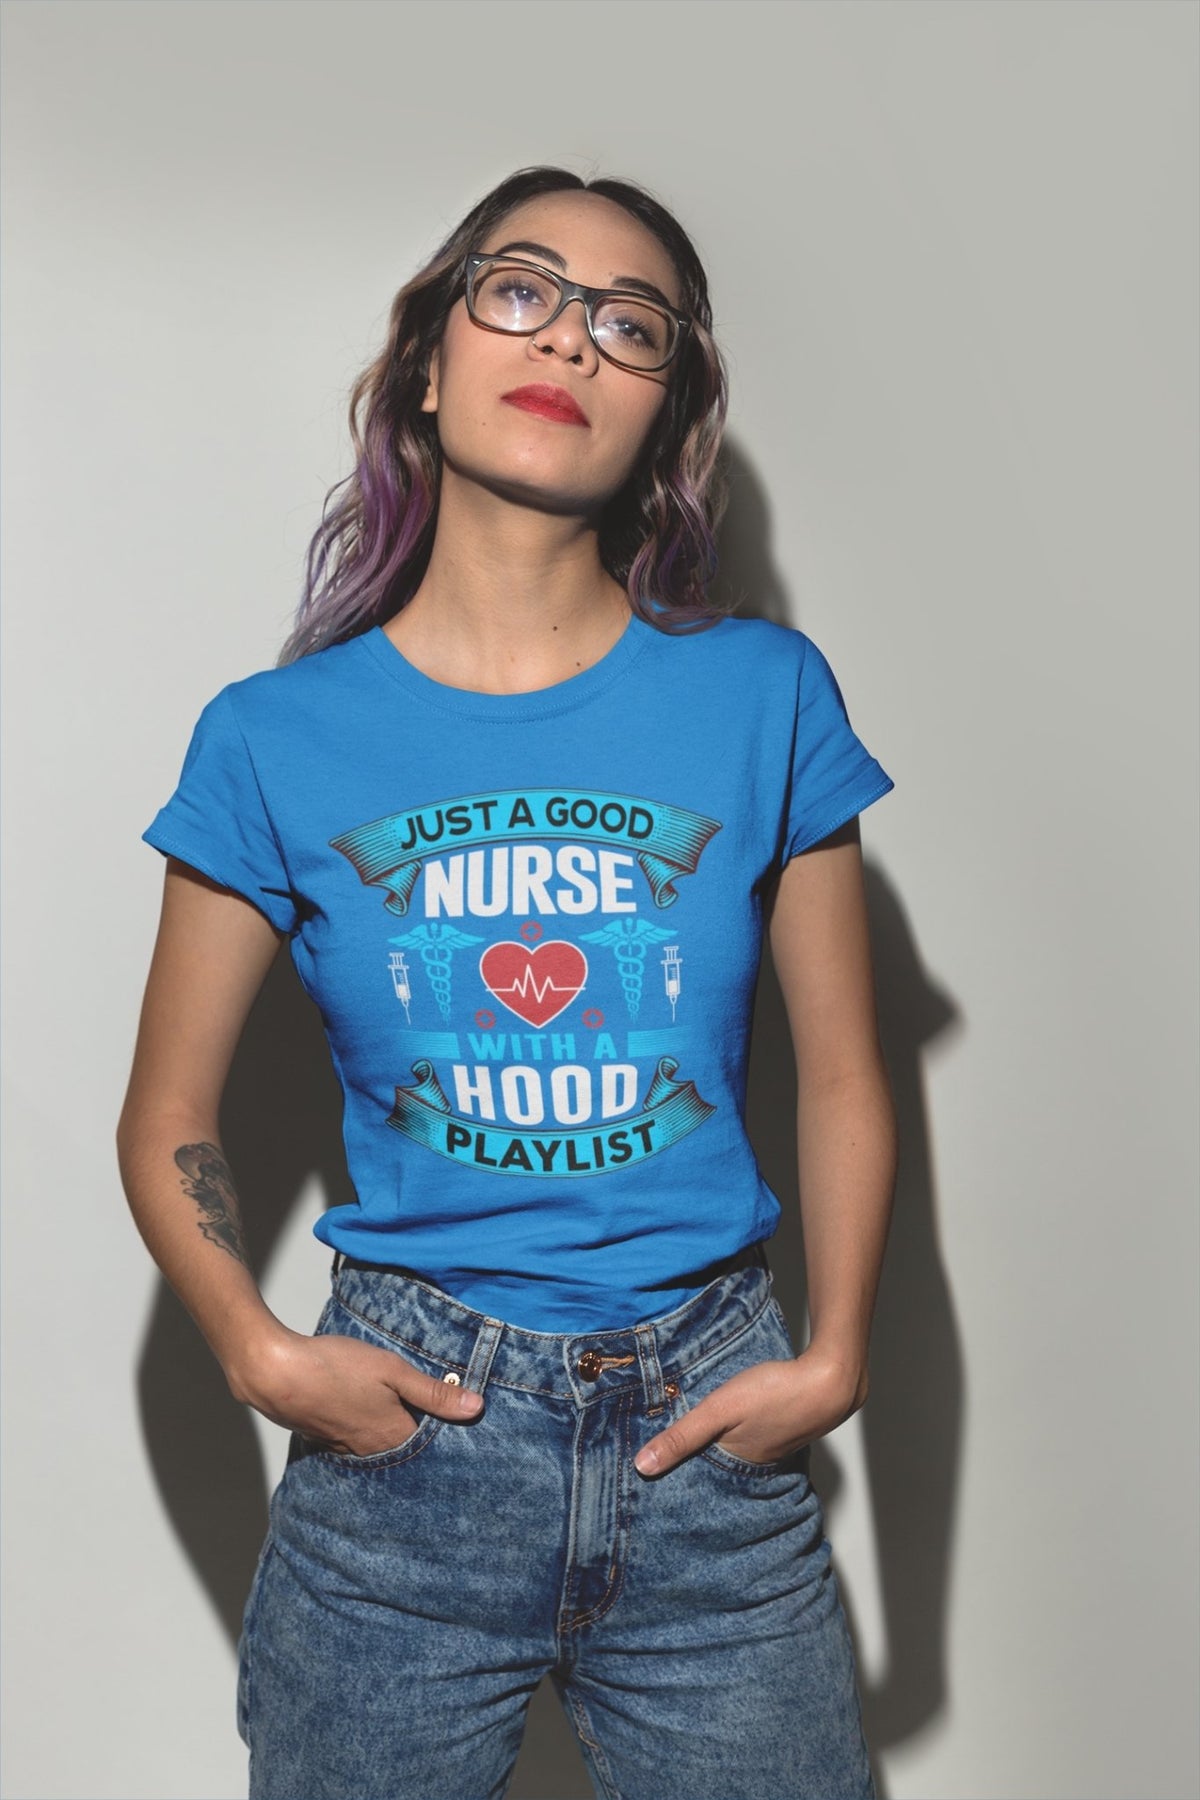 Just a good nurse with a hood playlist Women's Short Sleeve Tee - Salty Medic Clothing Co.